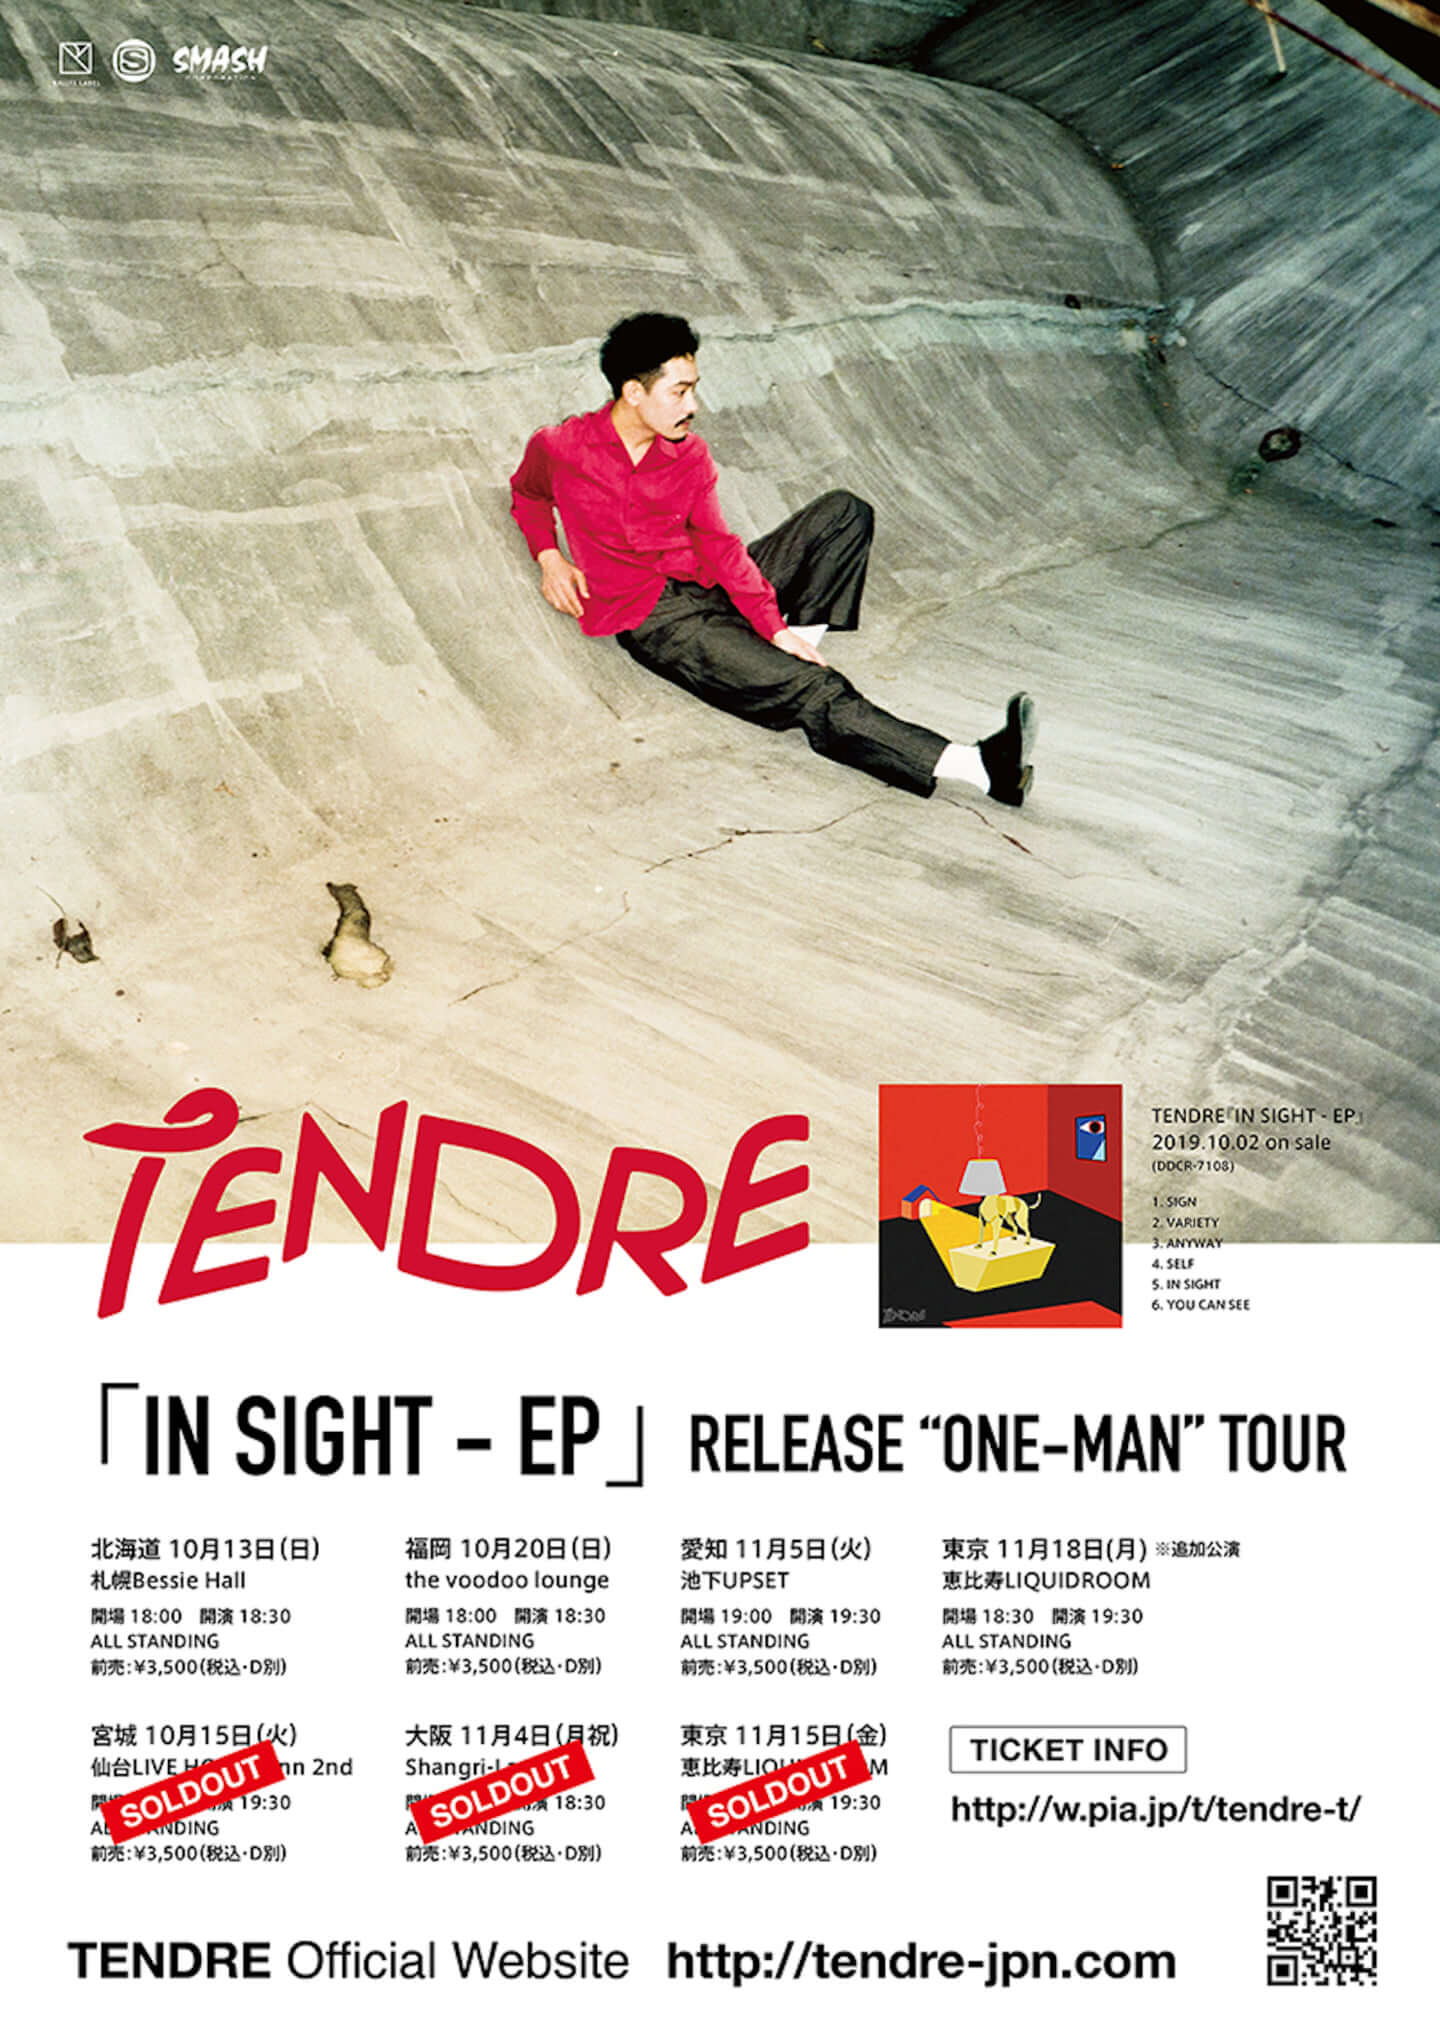 TENDREの新作『IN SIGHT - EP』のジャケット写真と収録曲が解禁｜新アー写も公開 front_a-1440x2038